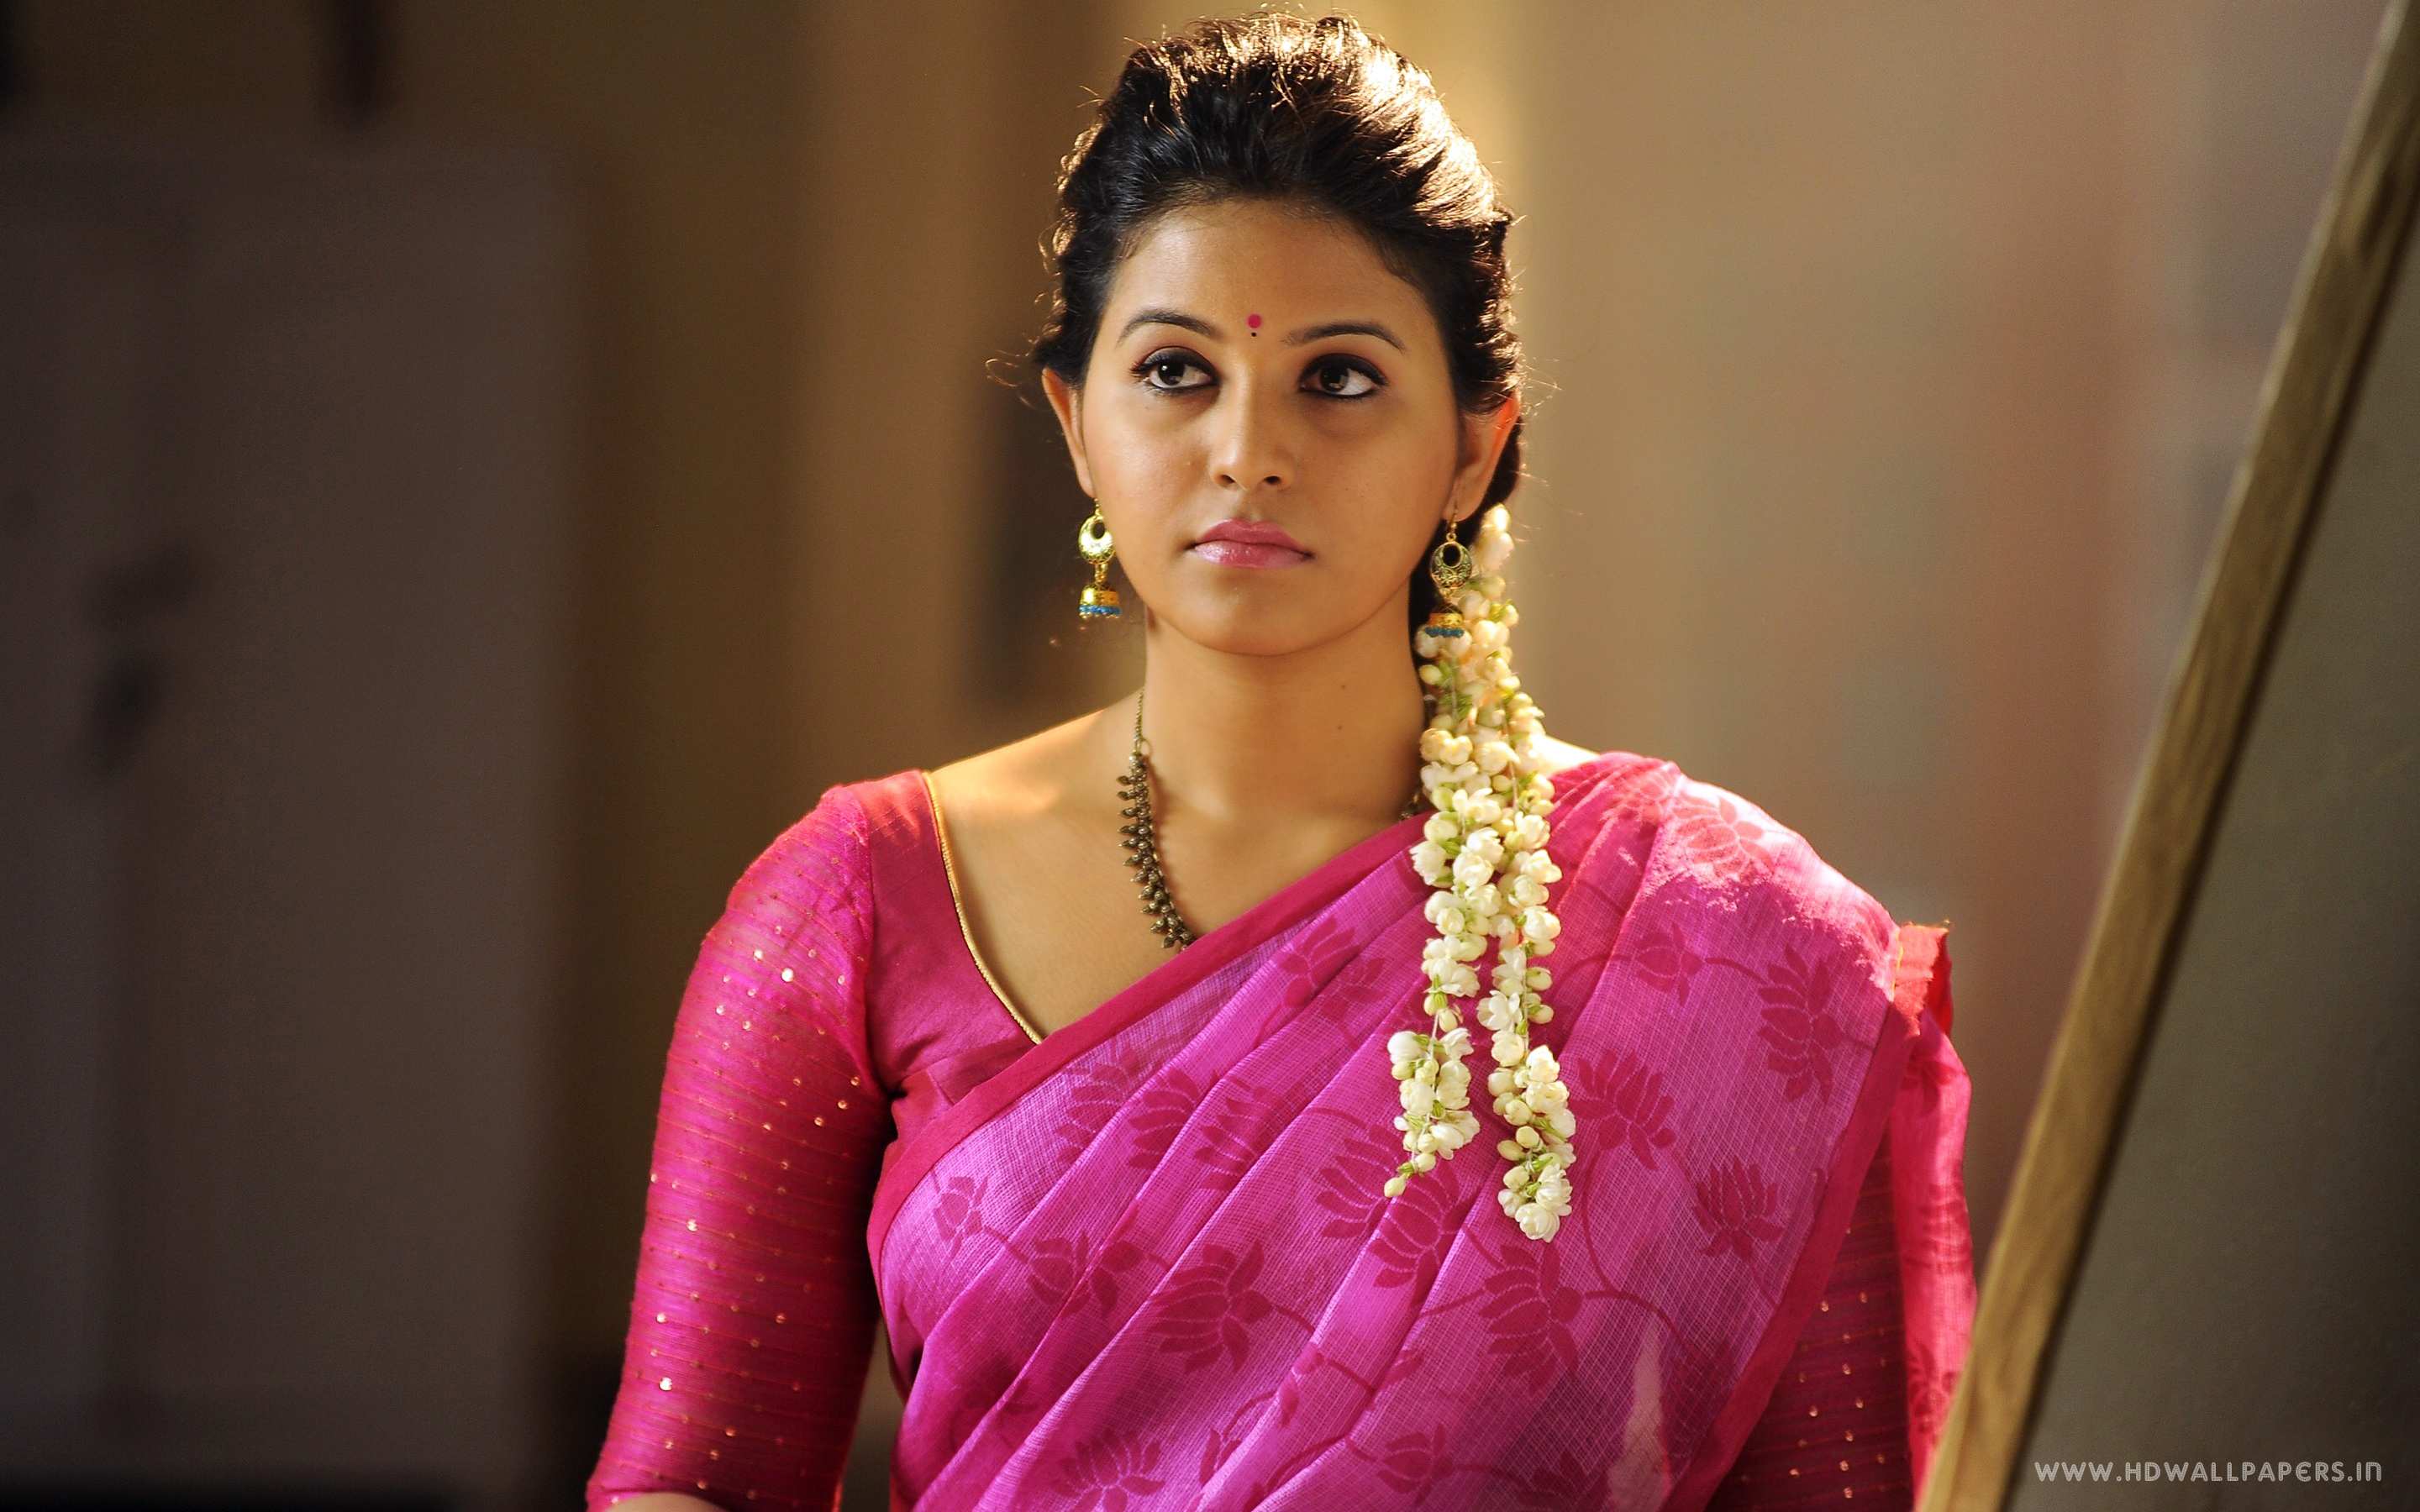 [50+] Tamil Actress HD Wallpapers on WallpaperSafari